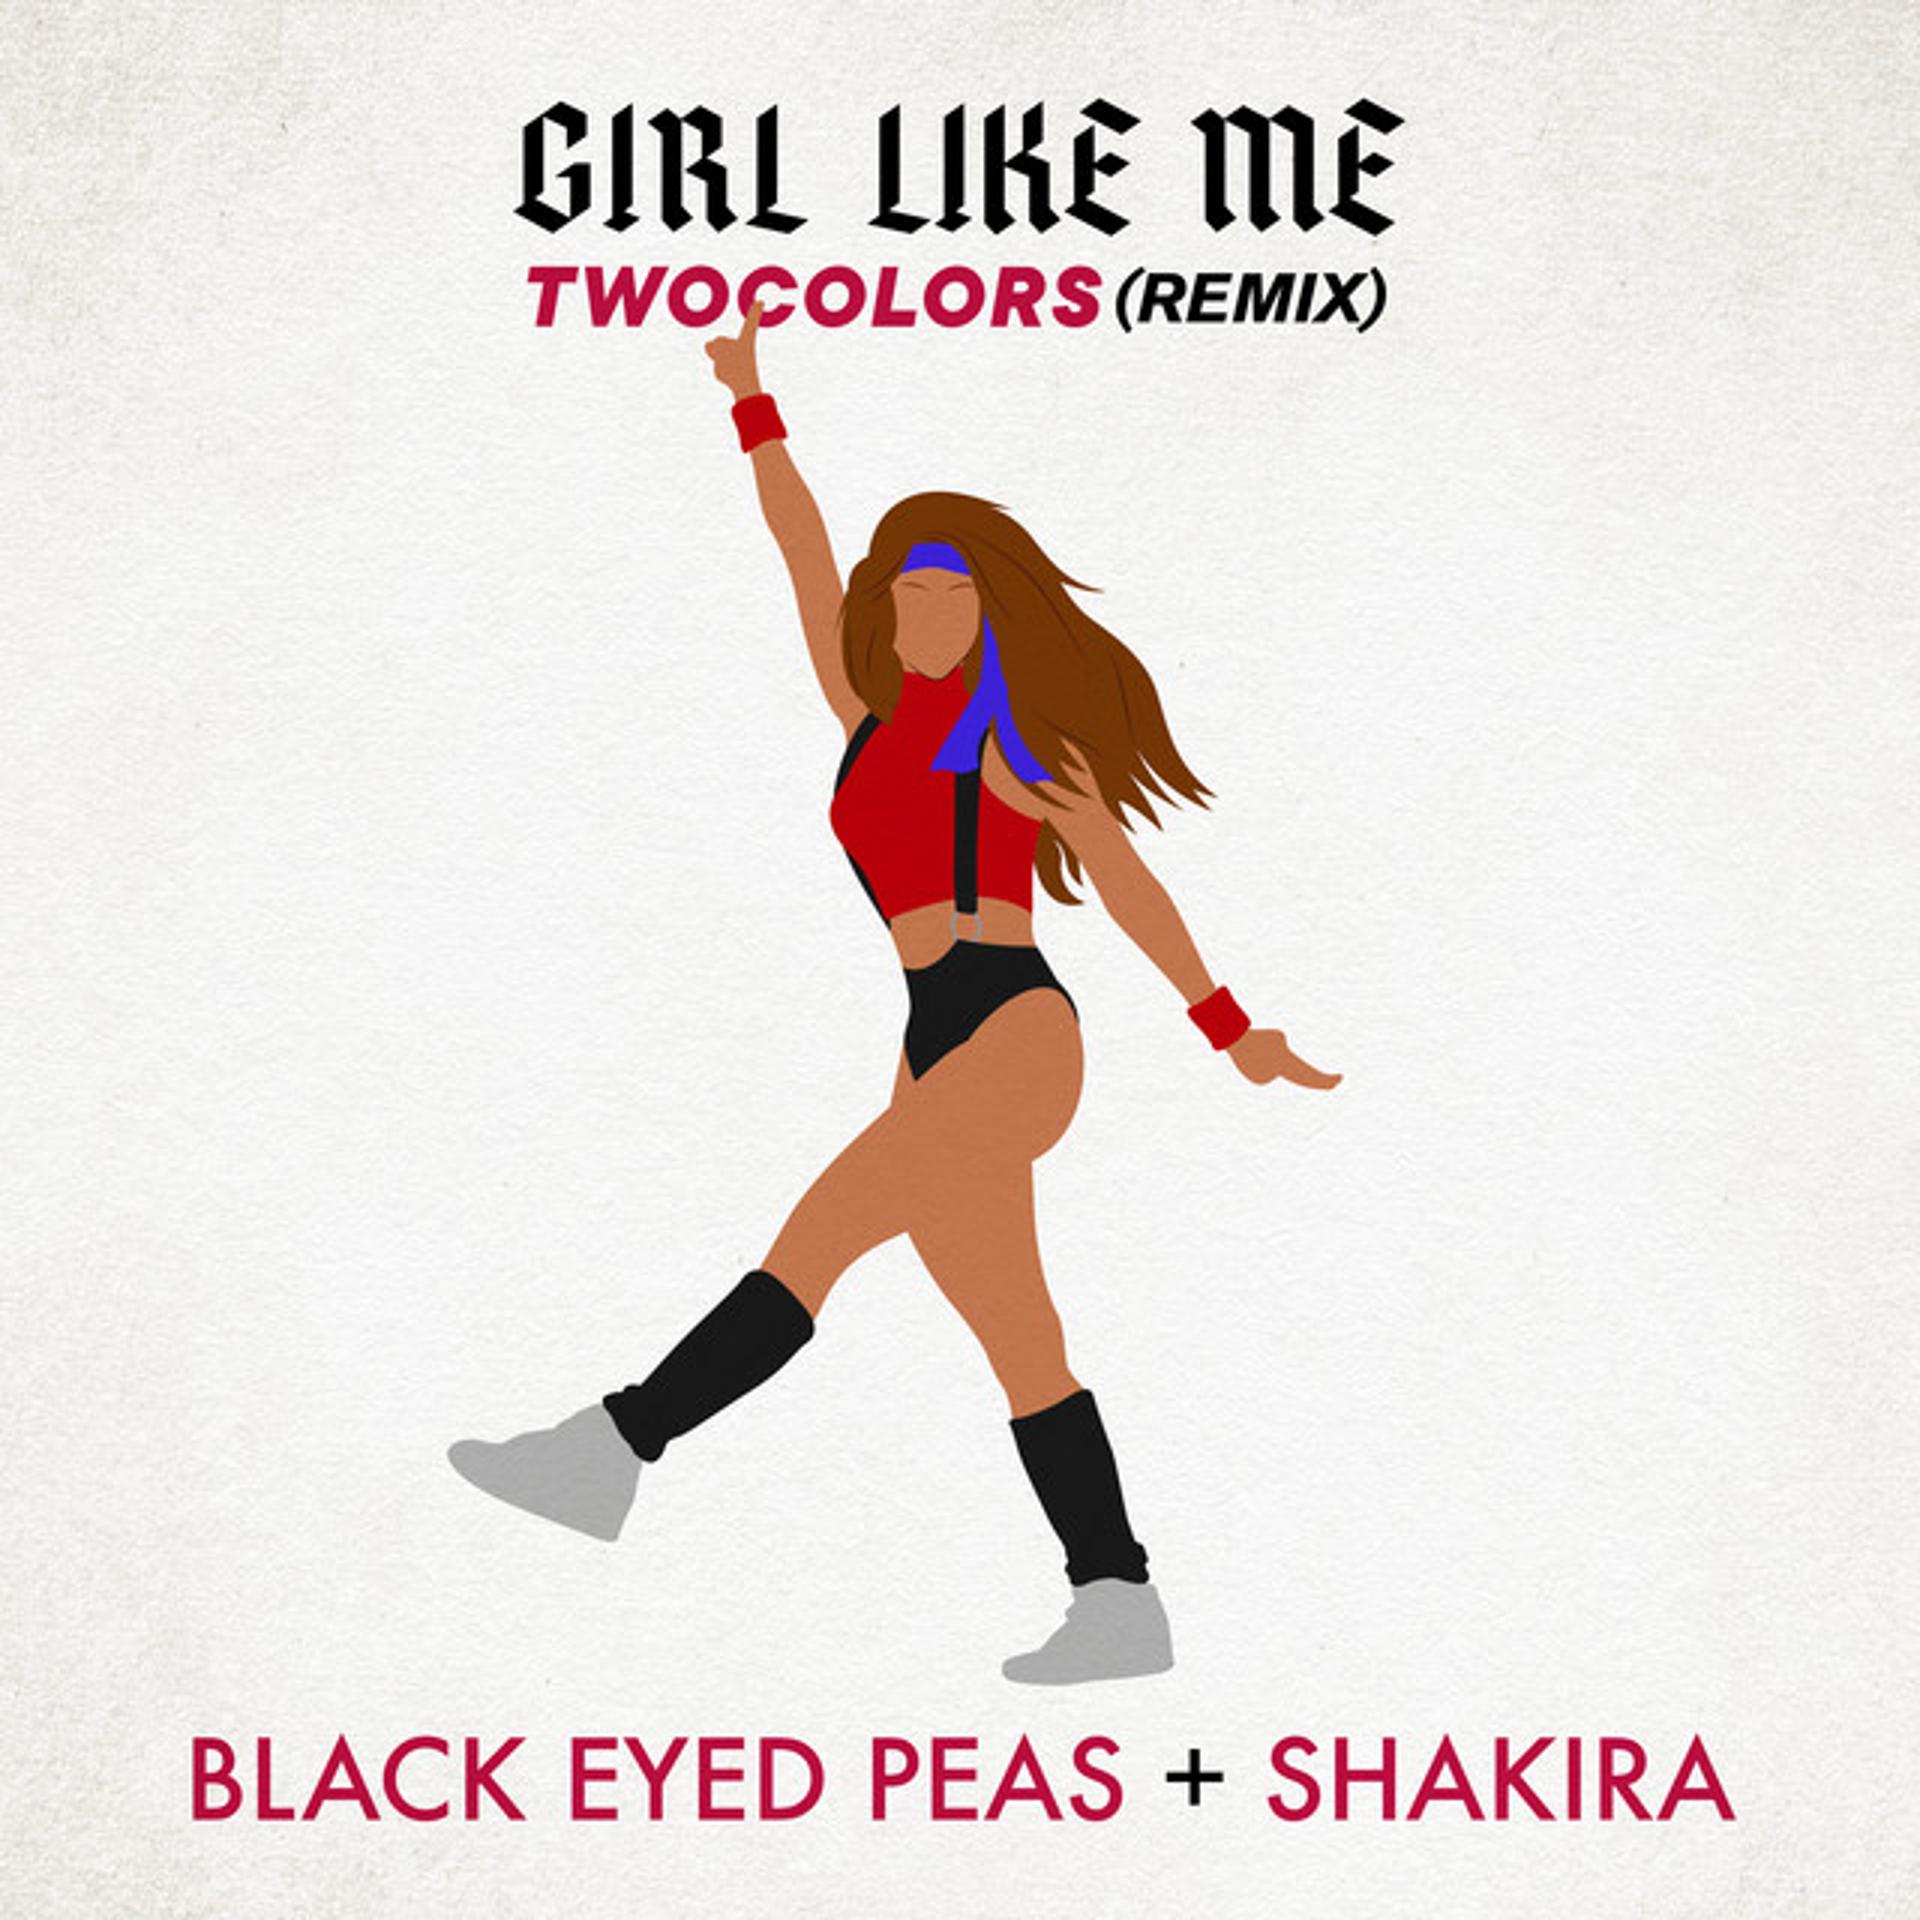 Black eyed Peas, Shakira - girl like me. Black eyed Peas, Shakira & TWOCOLORS. Black eyed Peas girl.